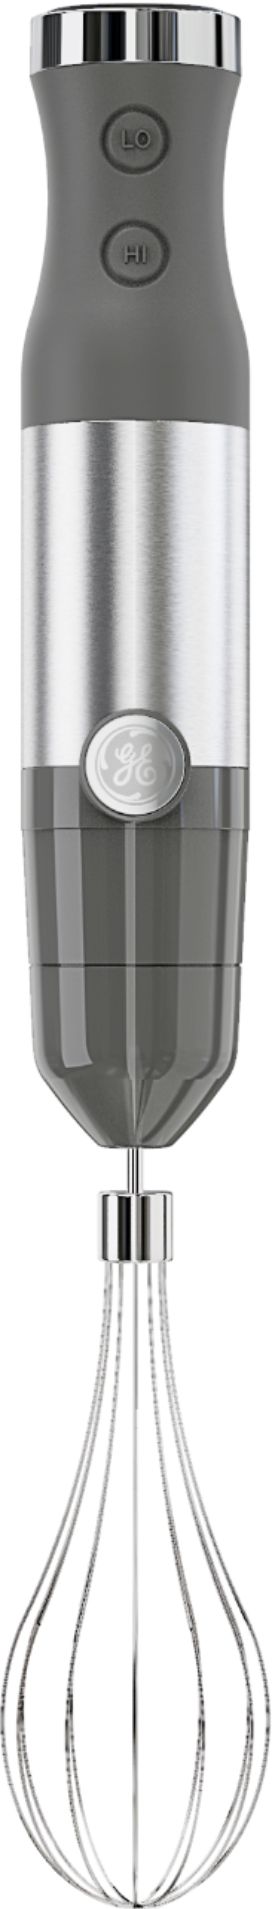 GE - Immersion 2-Speed Handheld Blender - Stainless Steel